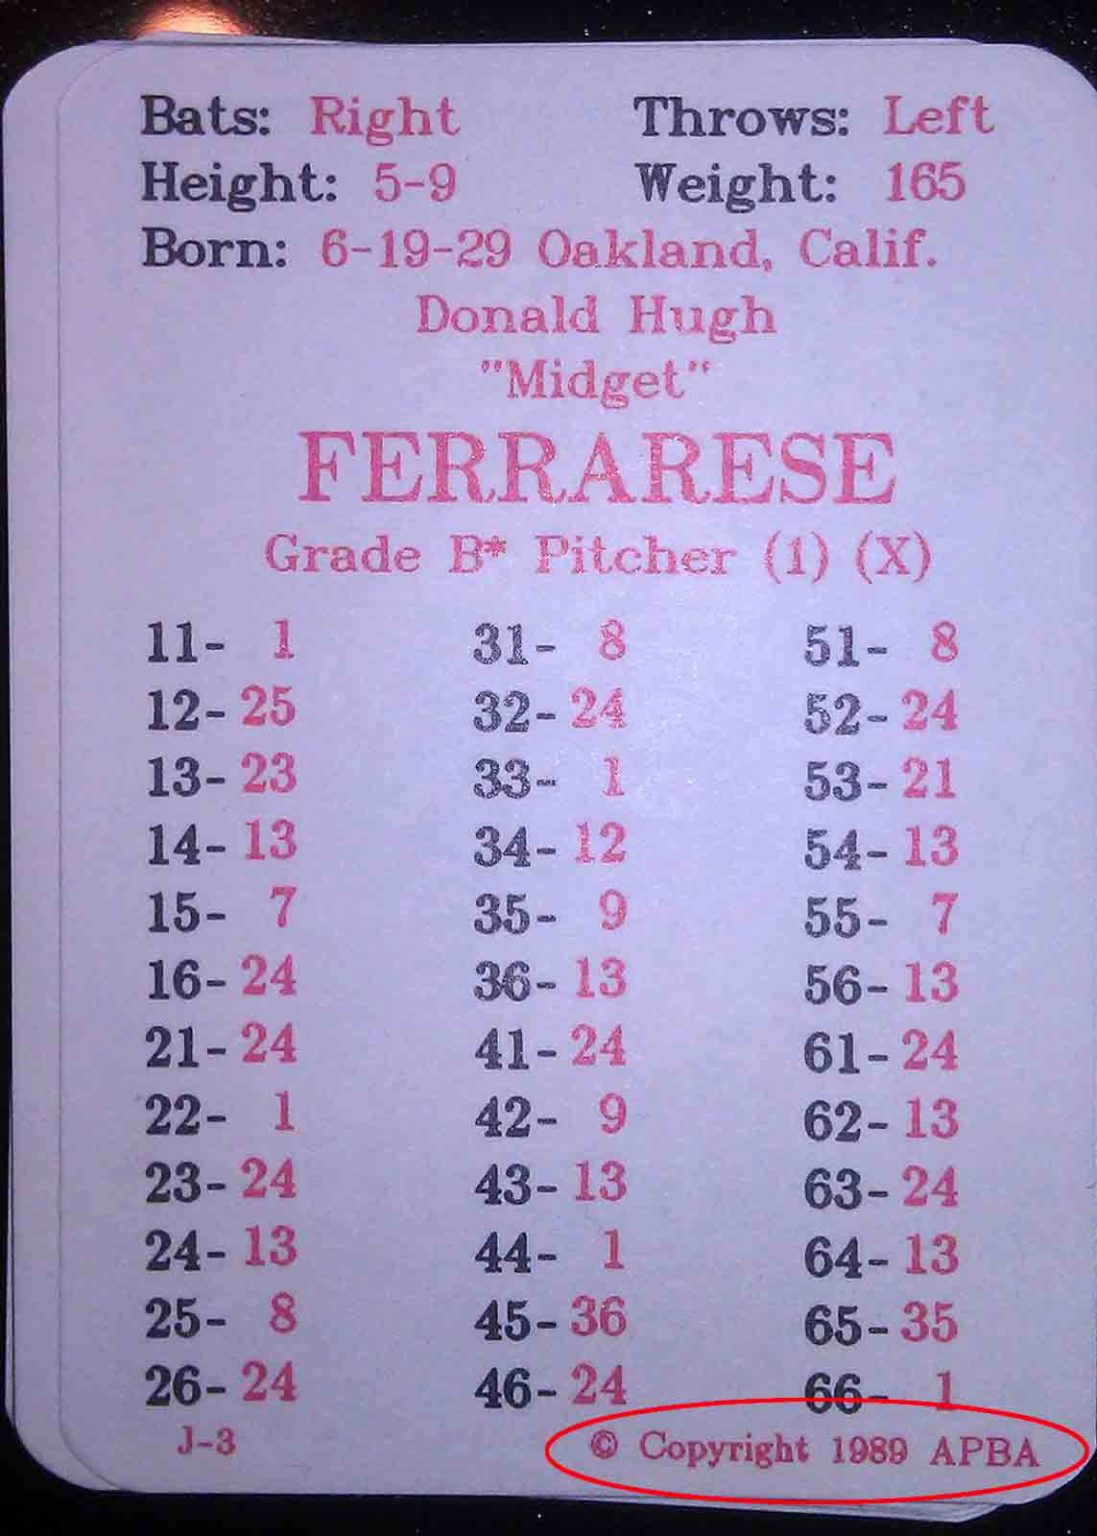 apba baseball card formula